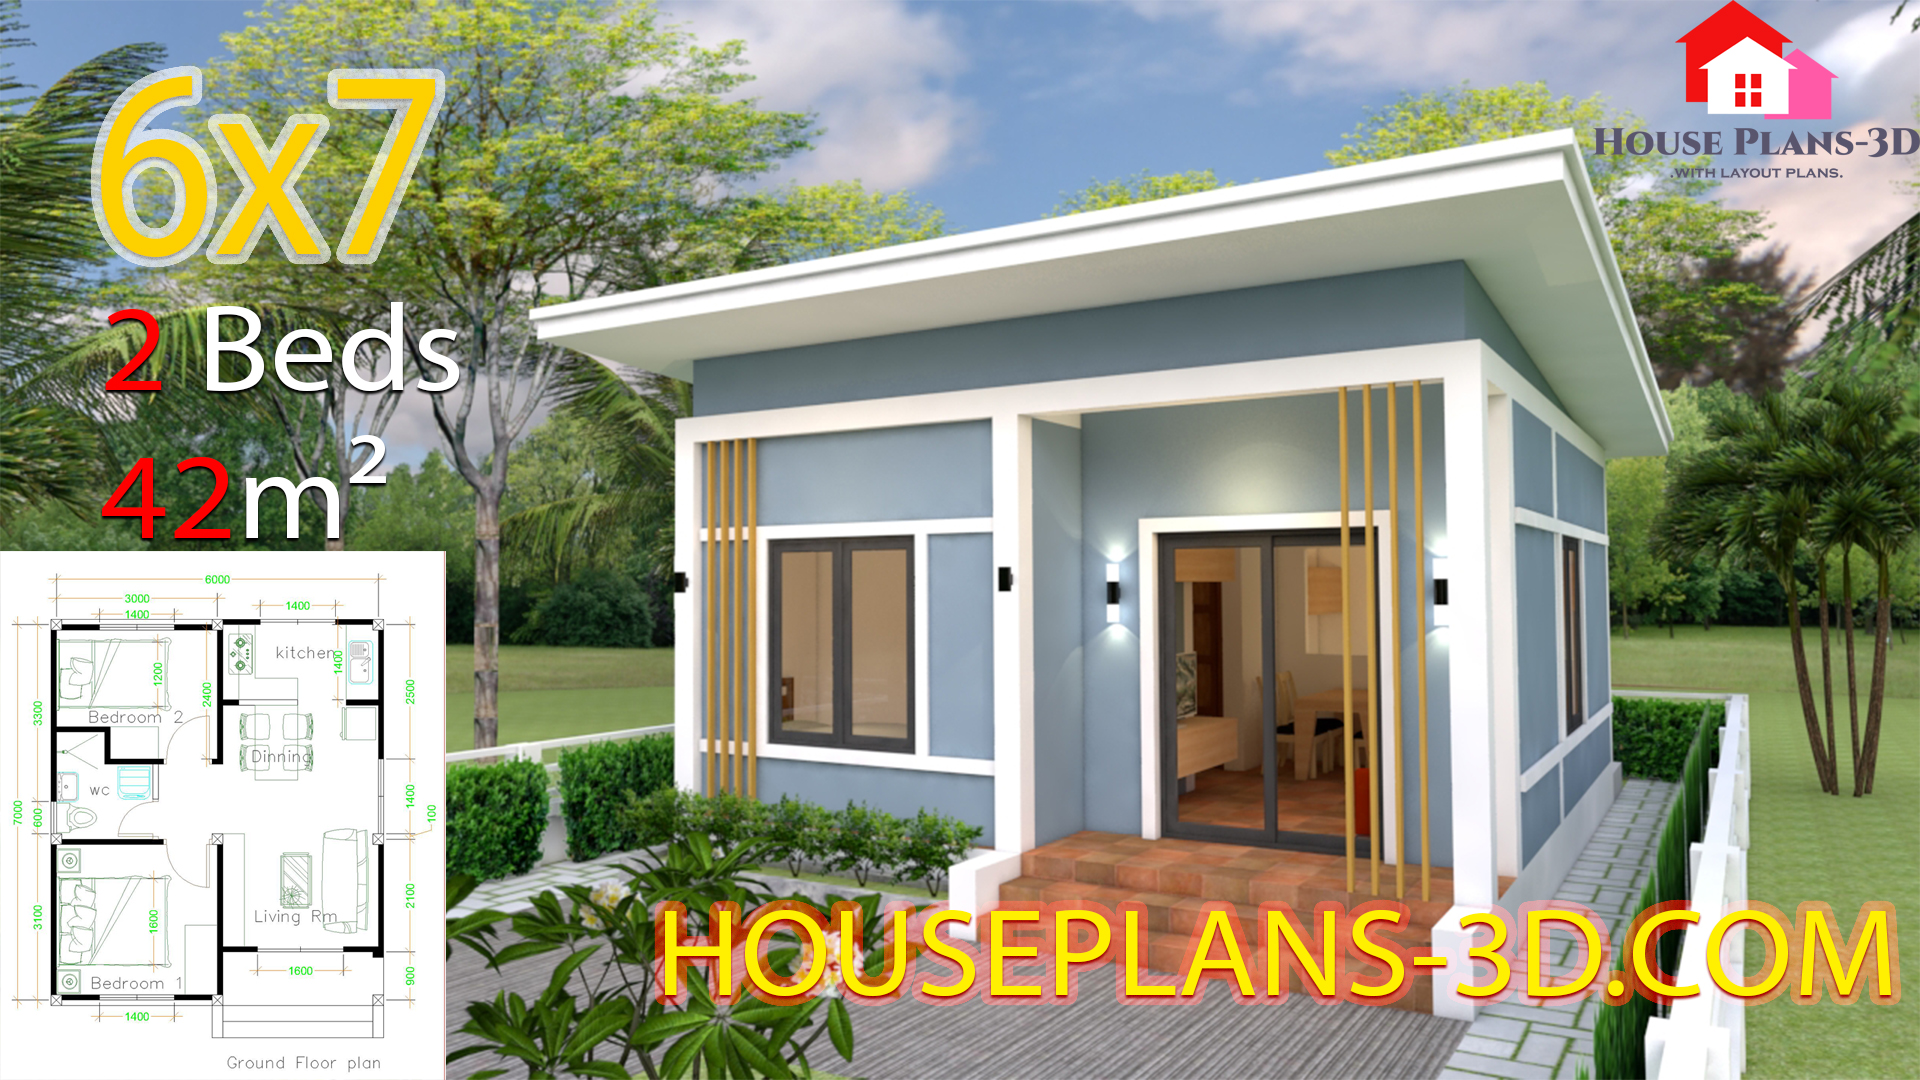 simple house designs